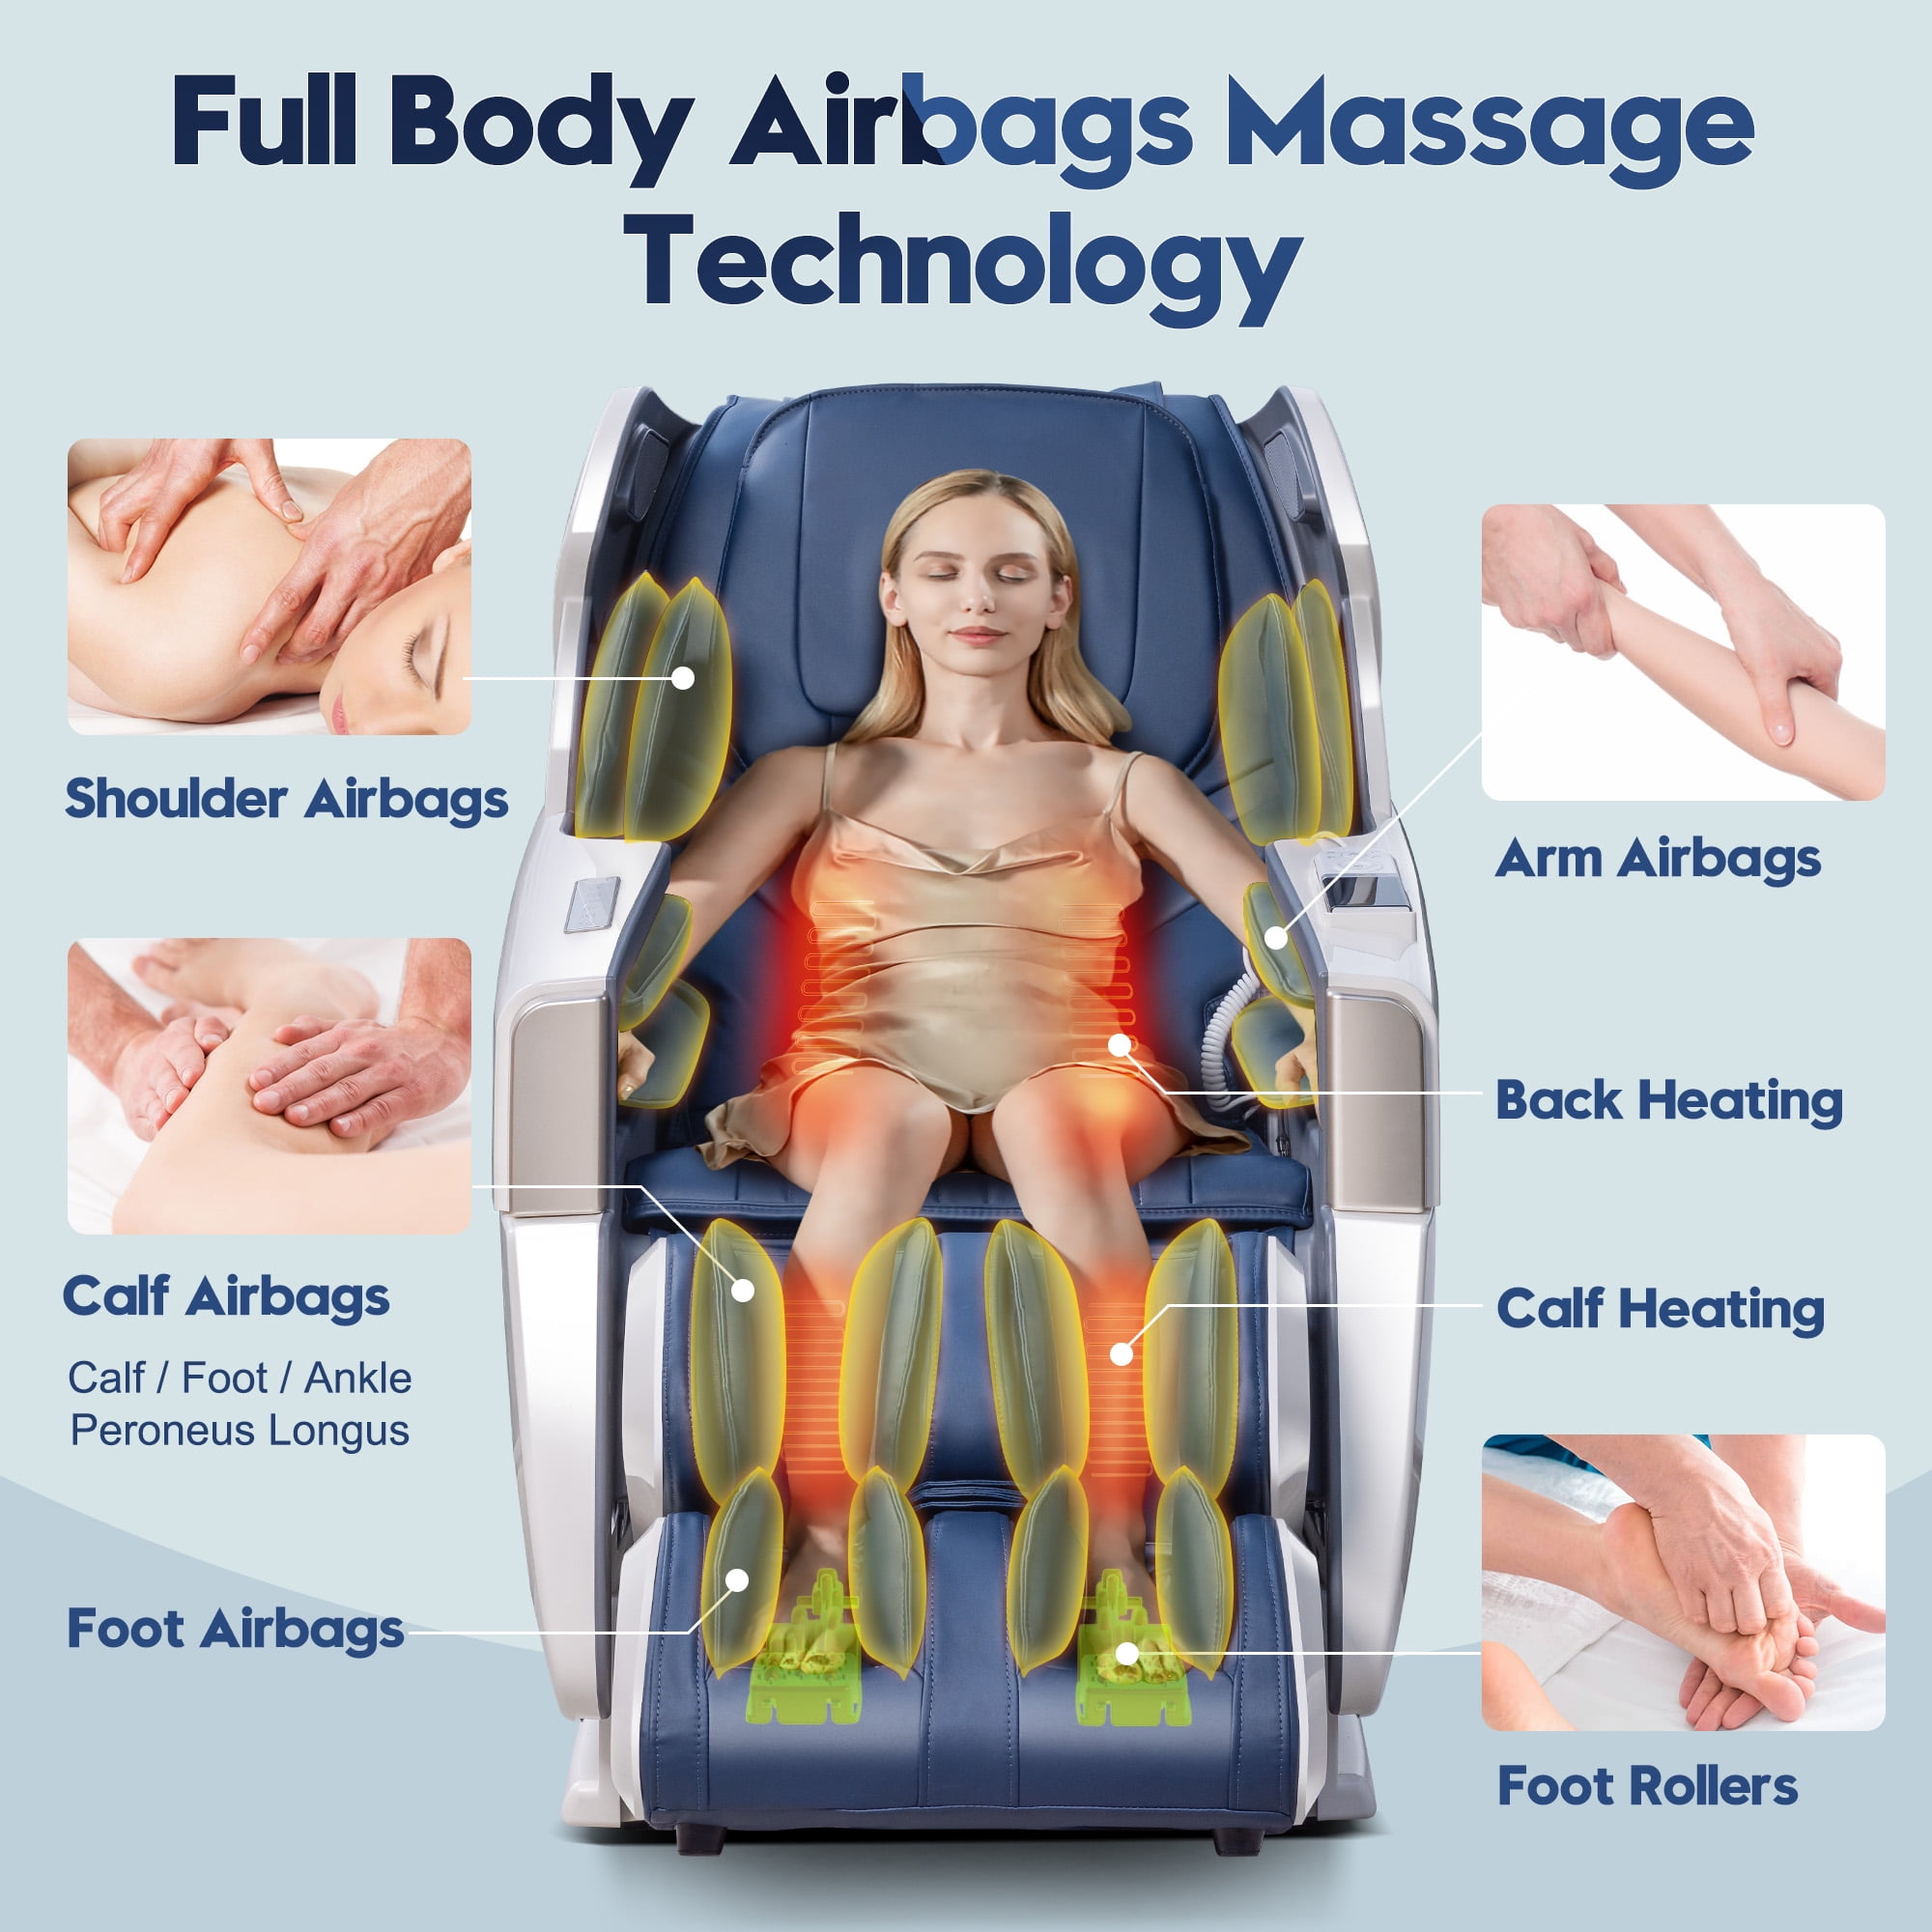 TEAMOR Large Luxury Massage Chair - 4D Fully Automatic Shiatsu Recliner  Massager, Full-Body Immersive Zero Gravity Interstellar Space Capsule -  Venue Marketplace